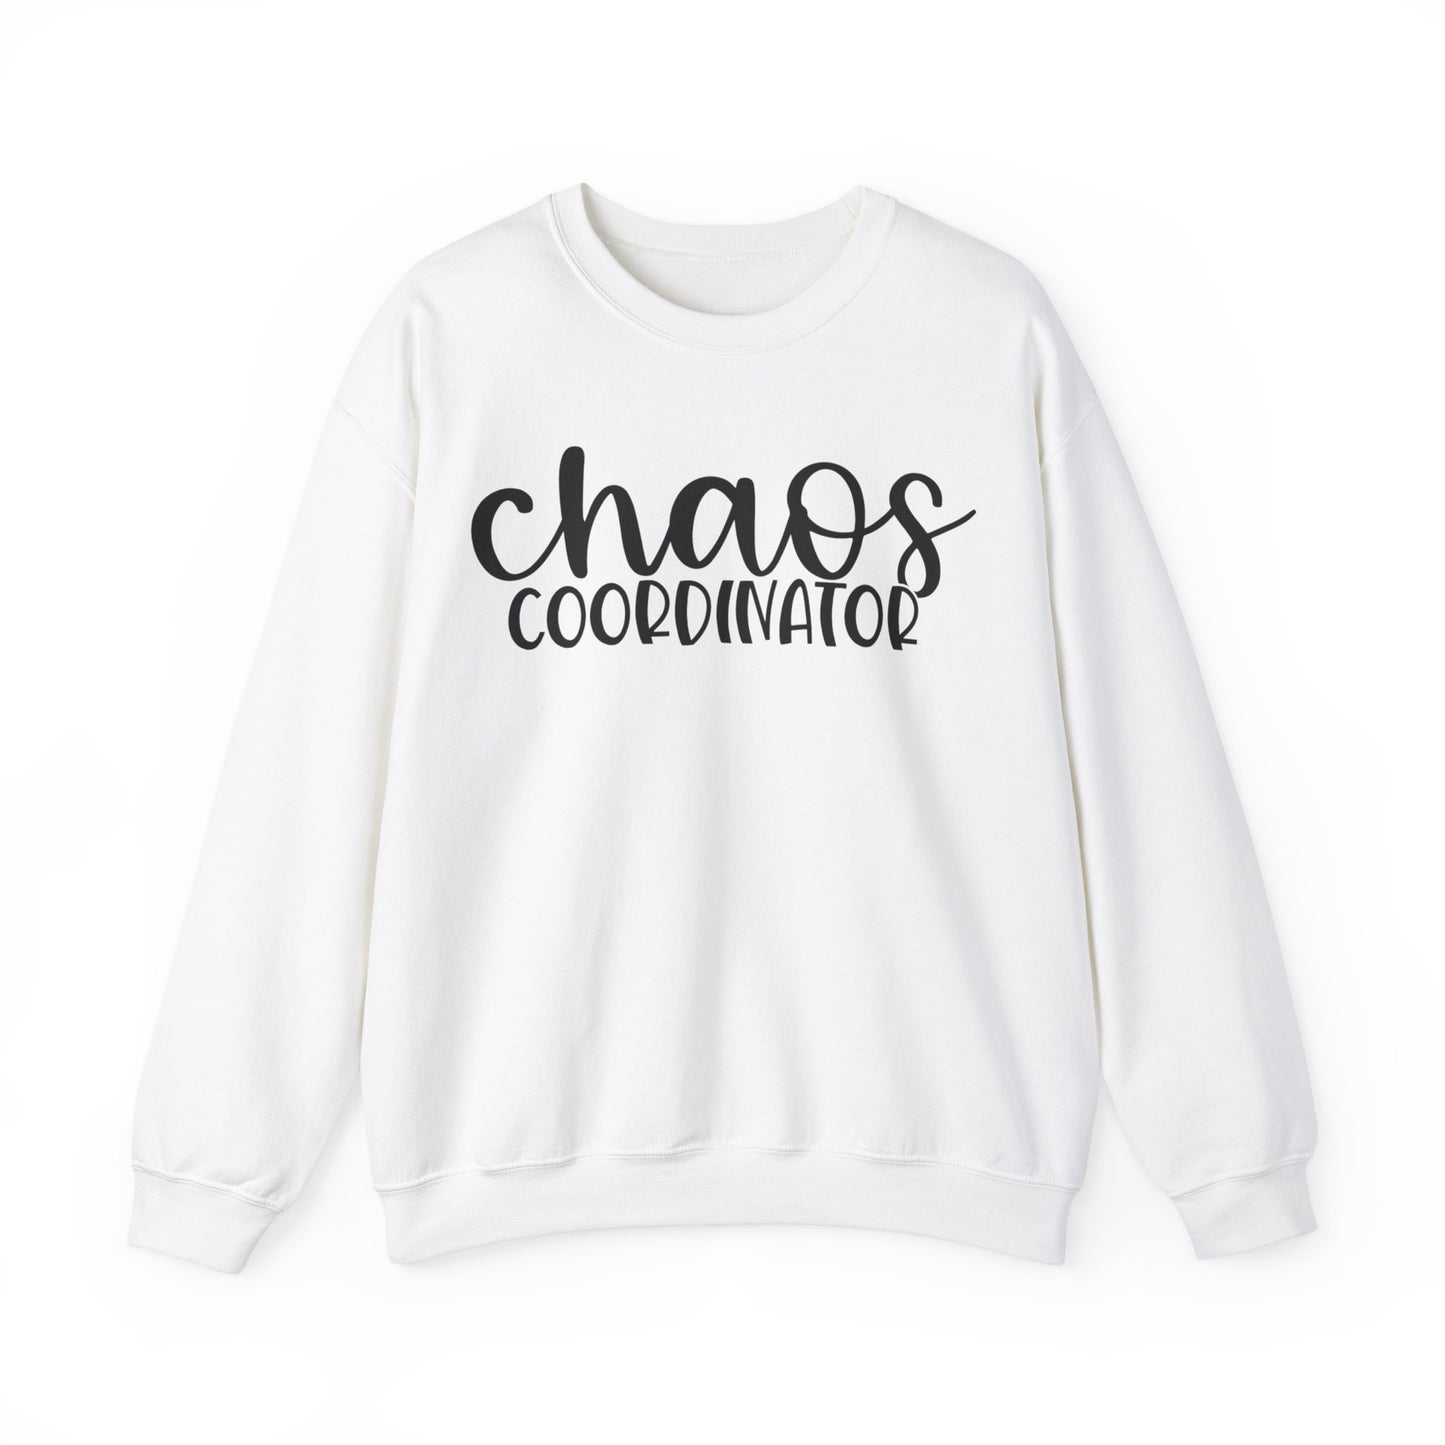 Chaos Coordinator - Crewneck Sweatshirt